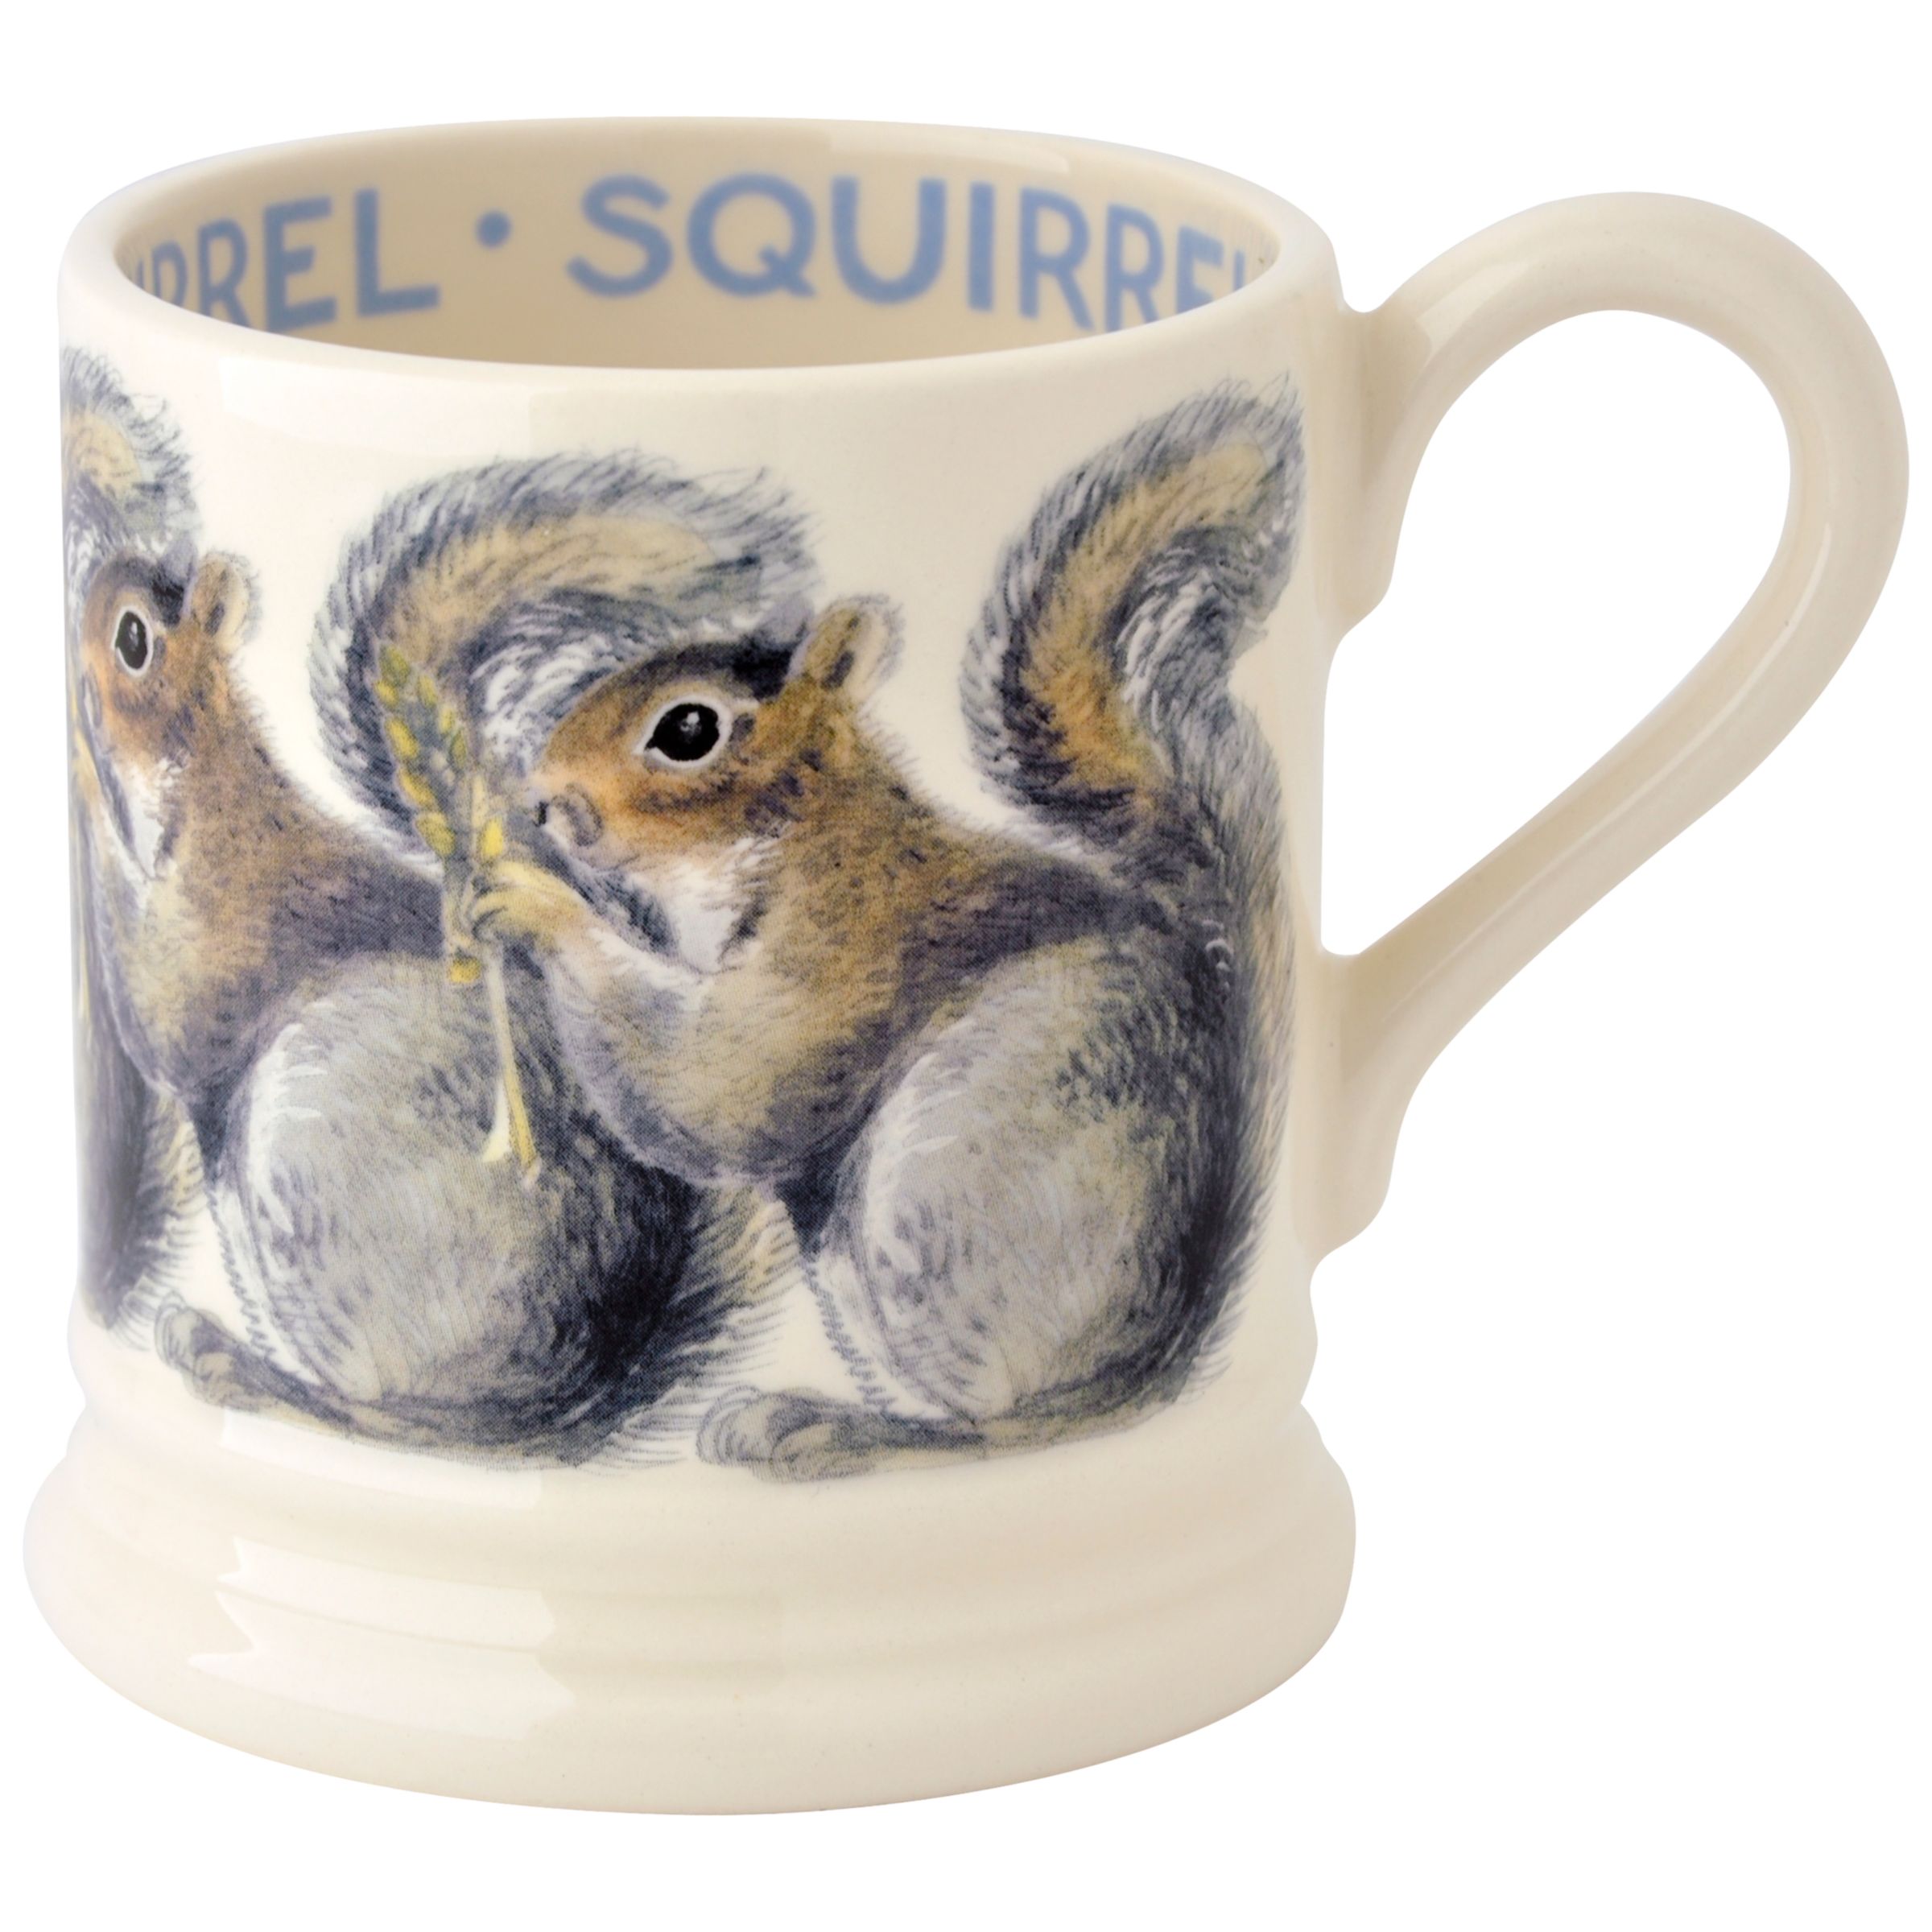 Emma Bridgewater Grey Squirrel Mug 0 3l At John Lewis And Partners